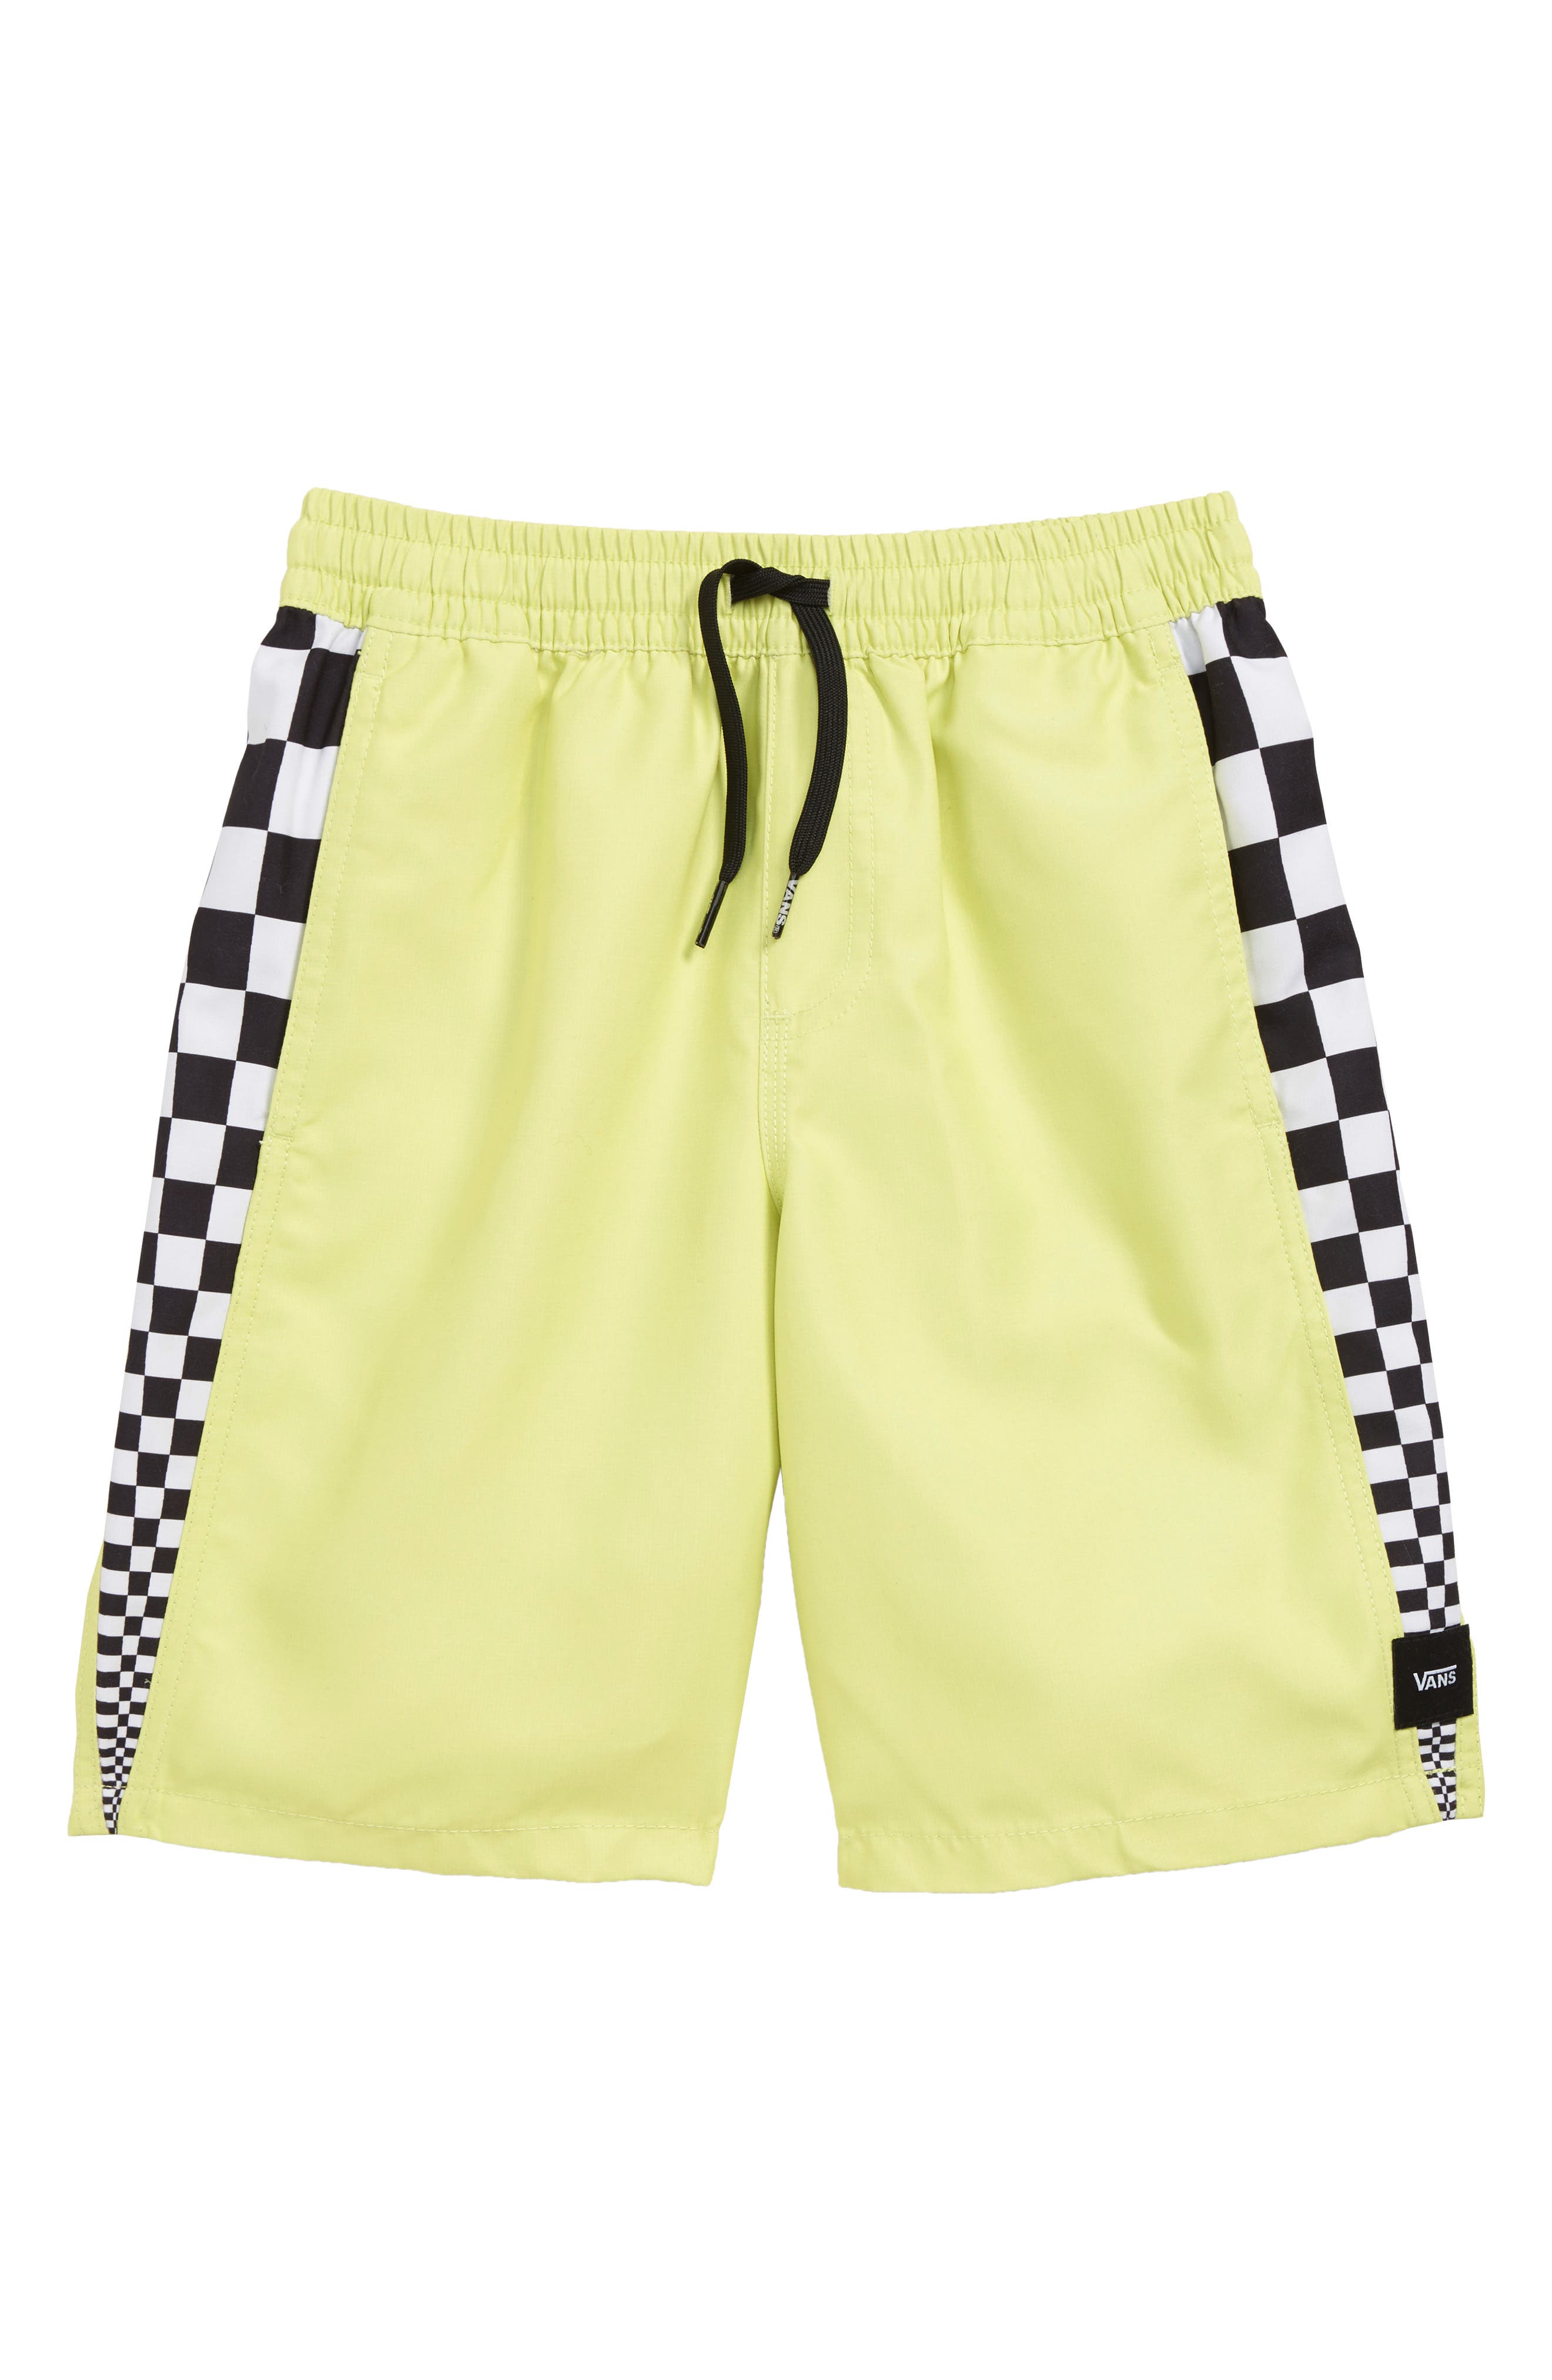 vans yellow shorts